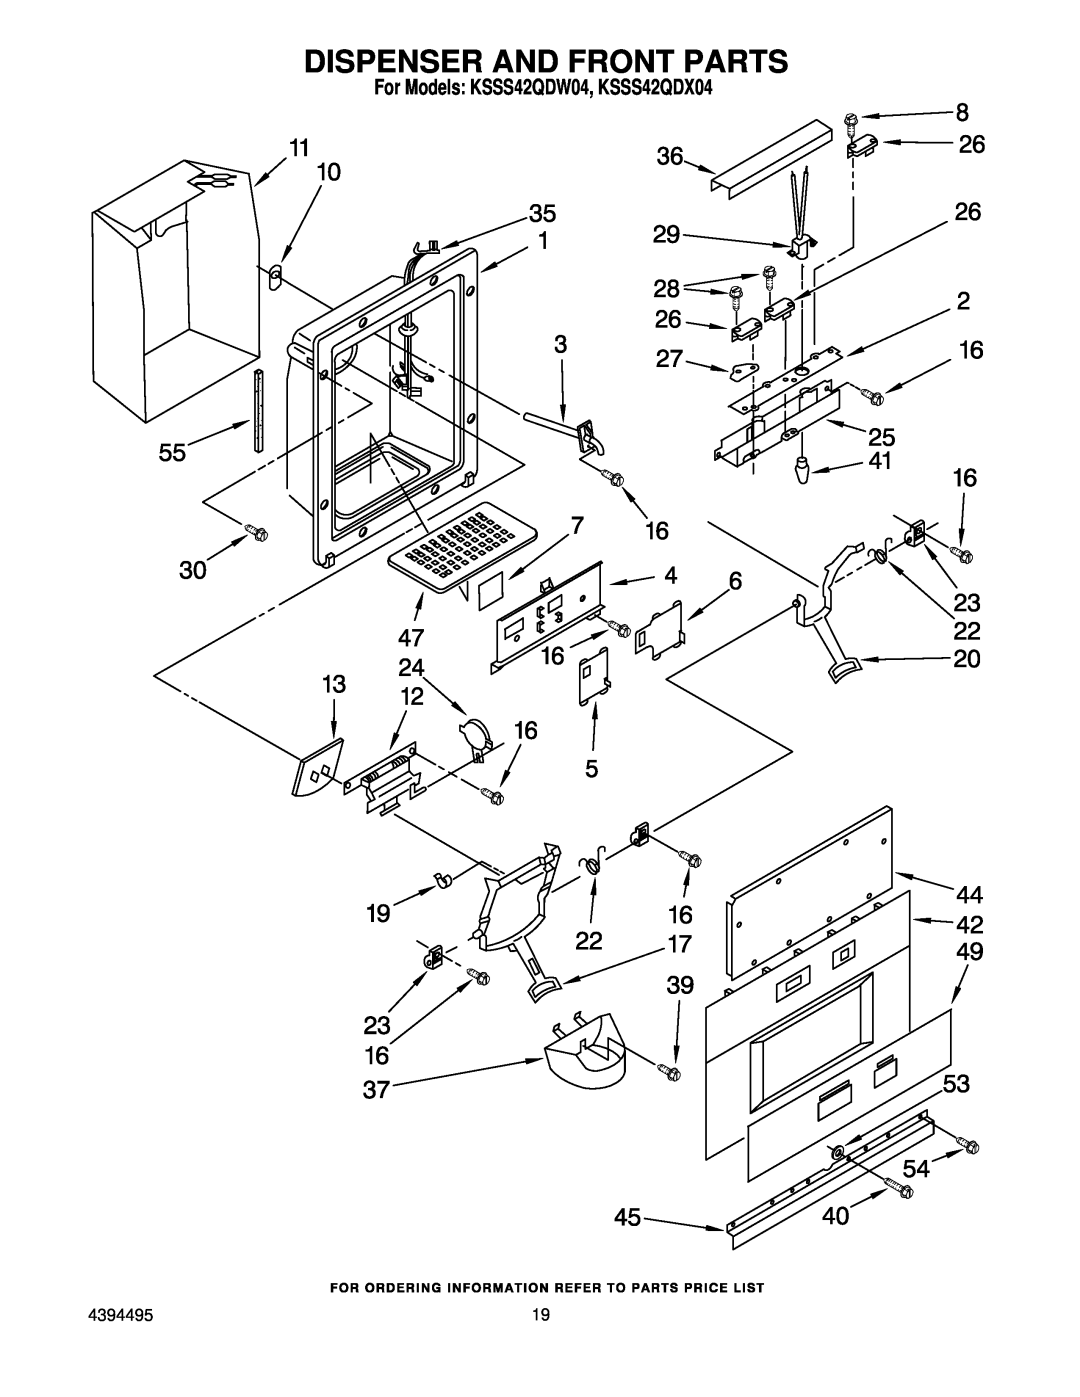 KitchenAid manual Dispenser And Front Parts, For Models KSSS42QDW04, KSSS42QDX04 